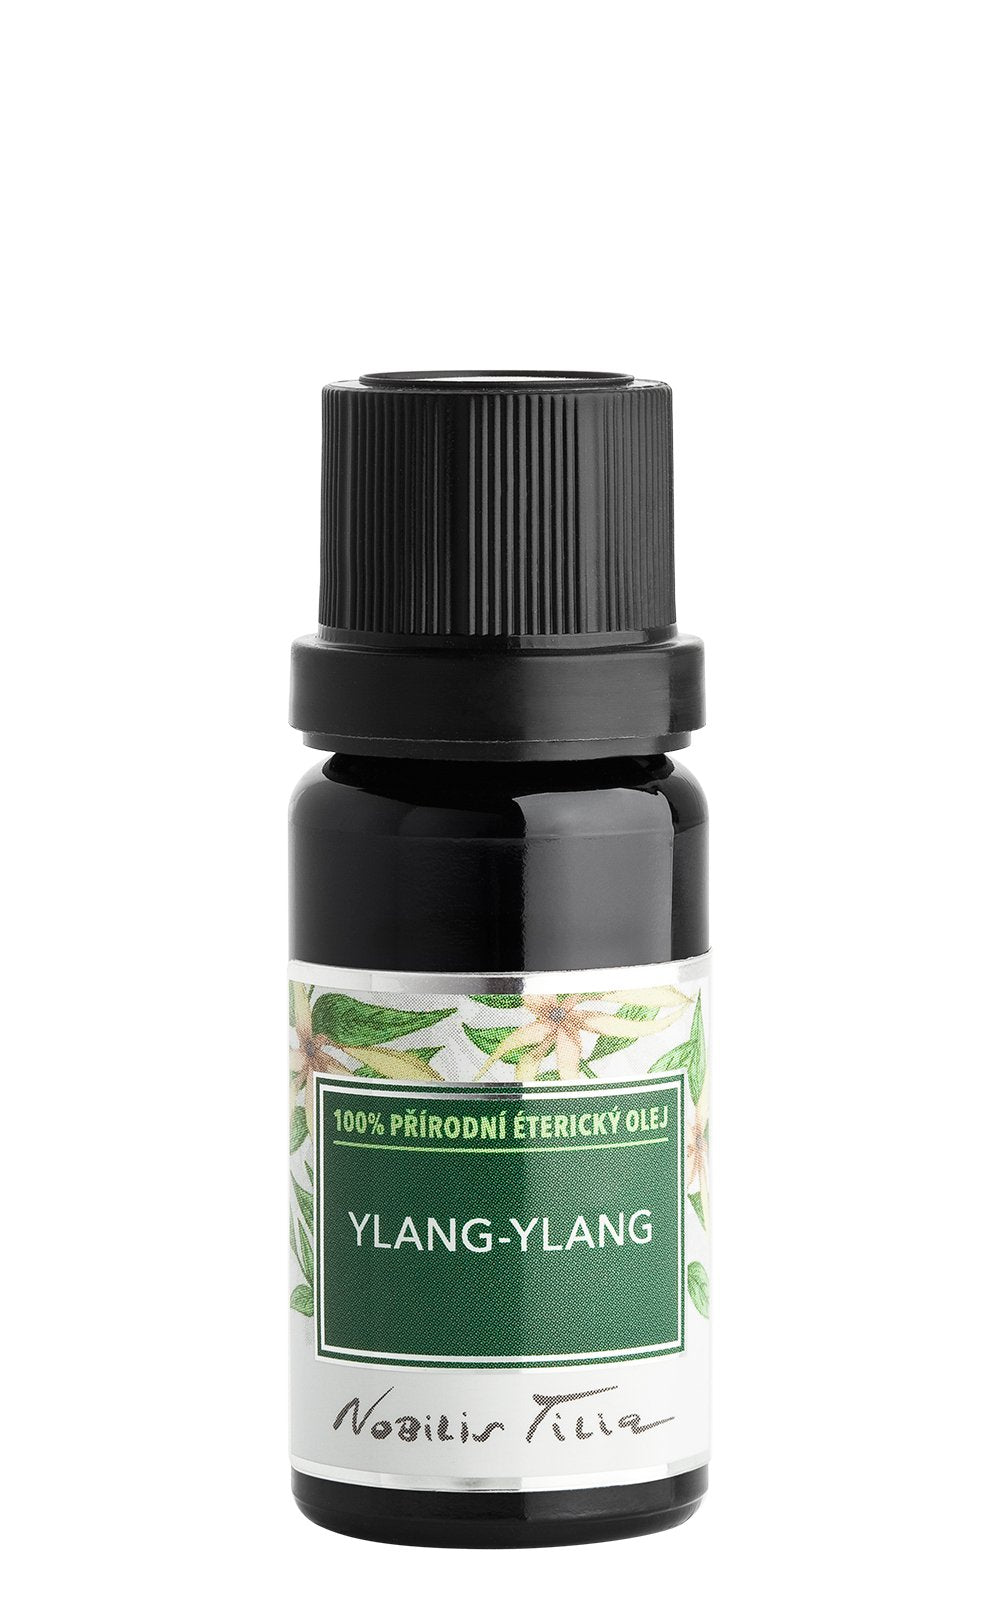 Nobilis Tilia Éterický olej - ylang-ylang (5 ml) - zklidňuje a harmonizuje emoce Nobilis Tilia